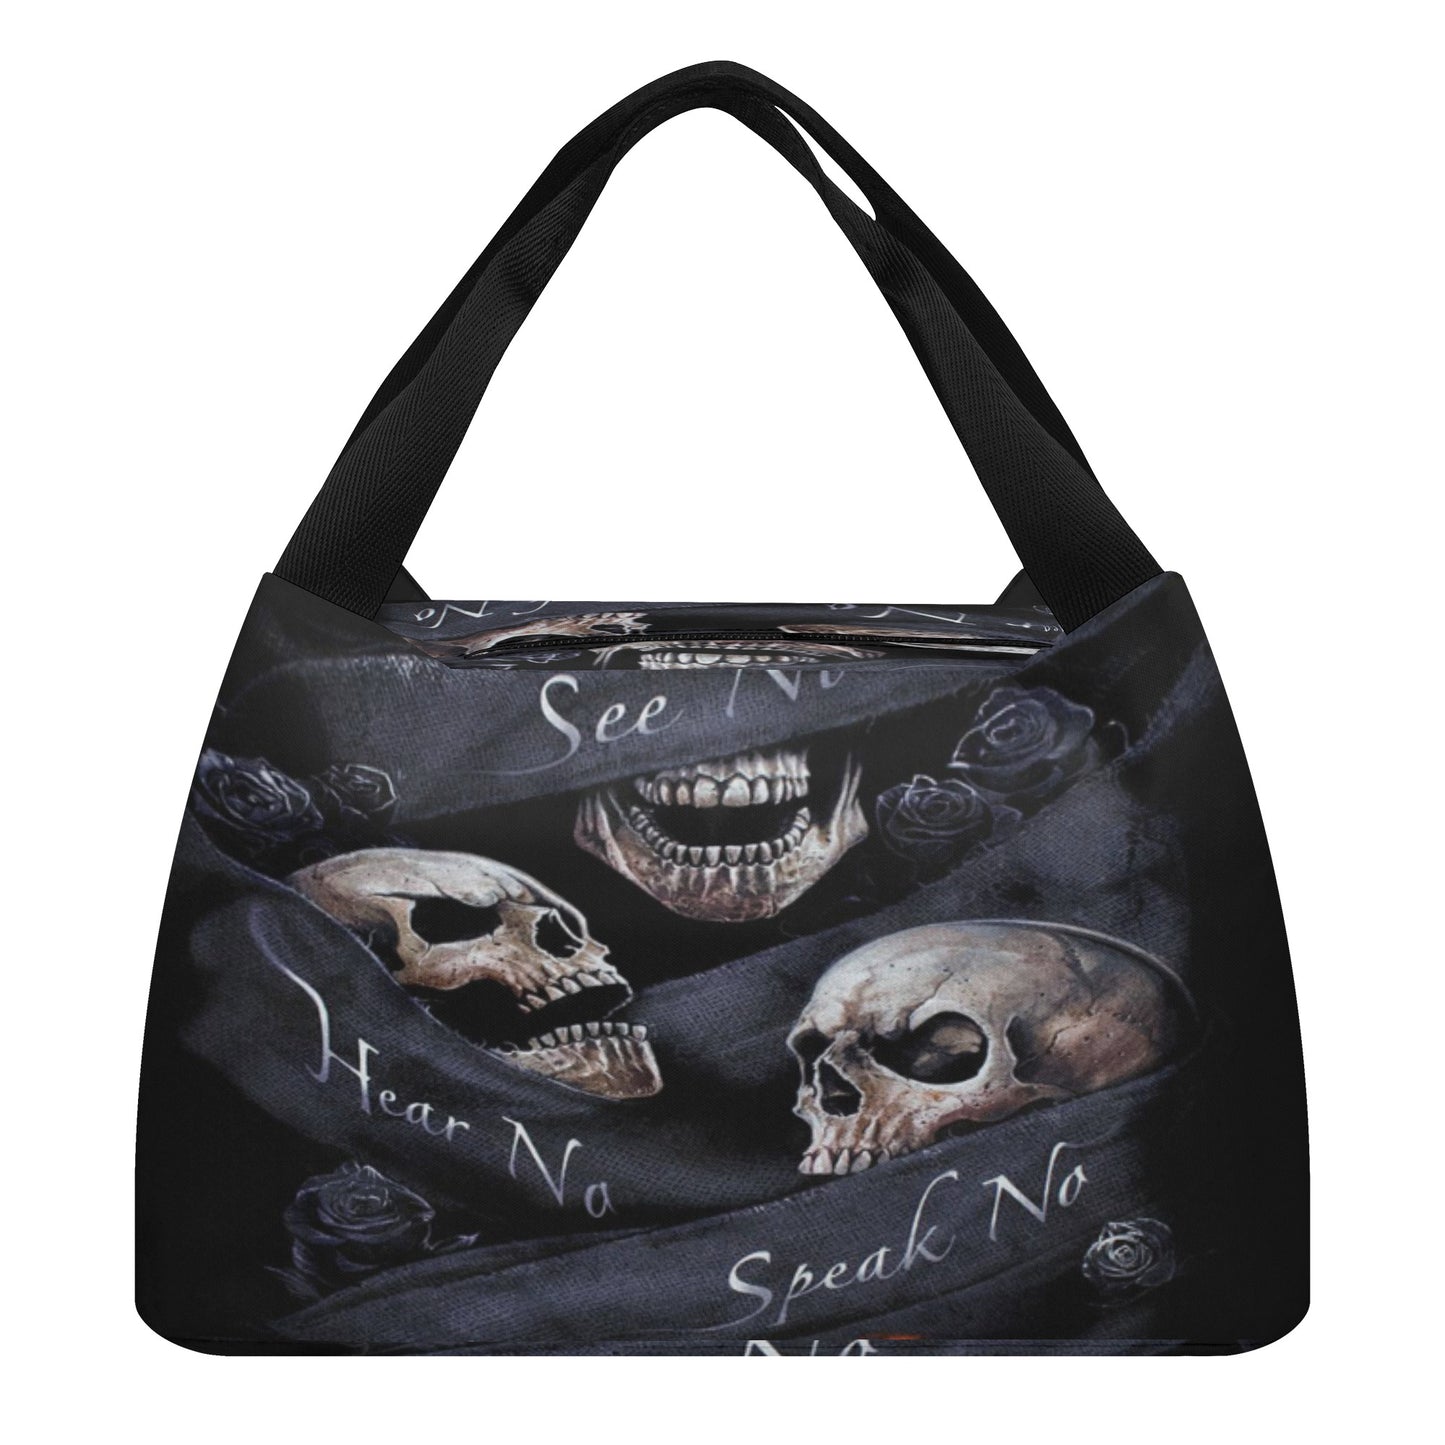 No see no hear no speak evils skull Portable Tote Lunch Bag